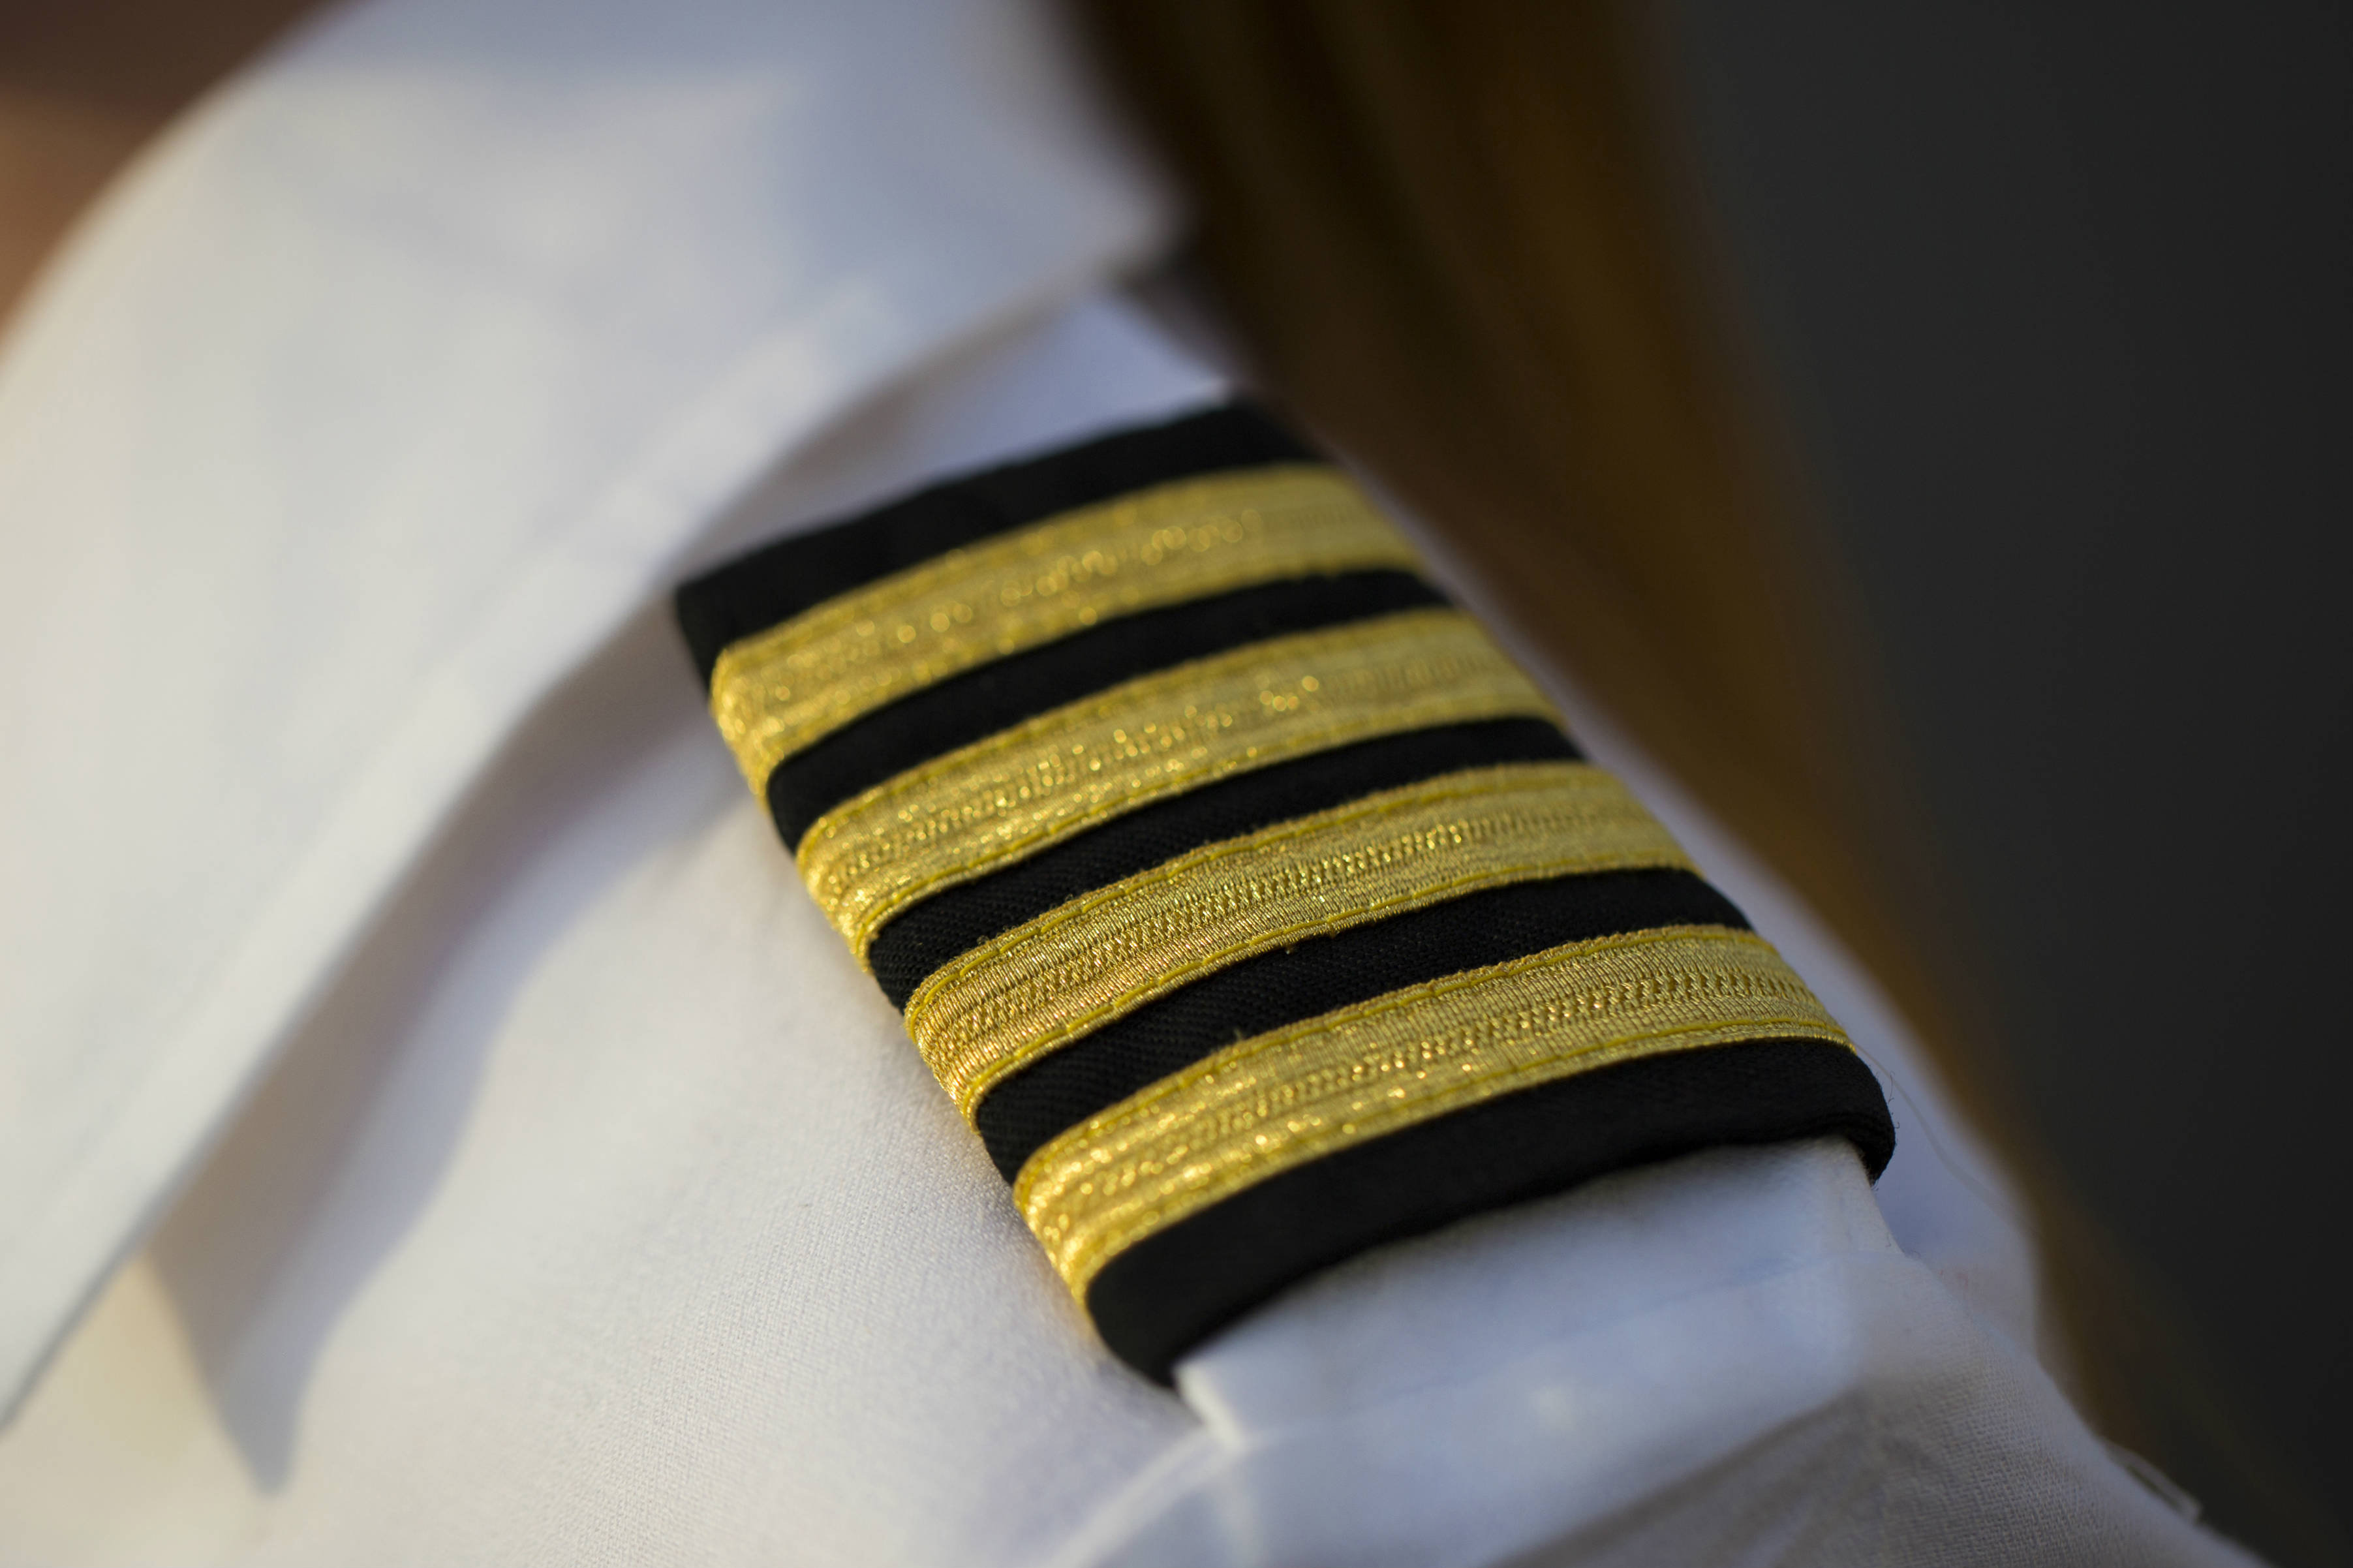 Pilot shoulder stripes on uniform